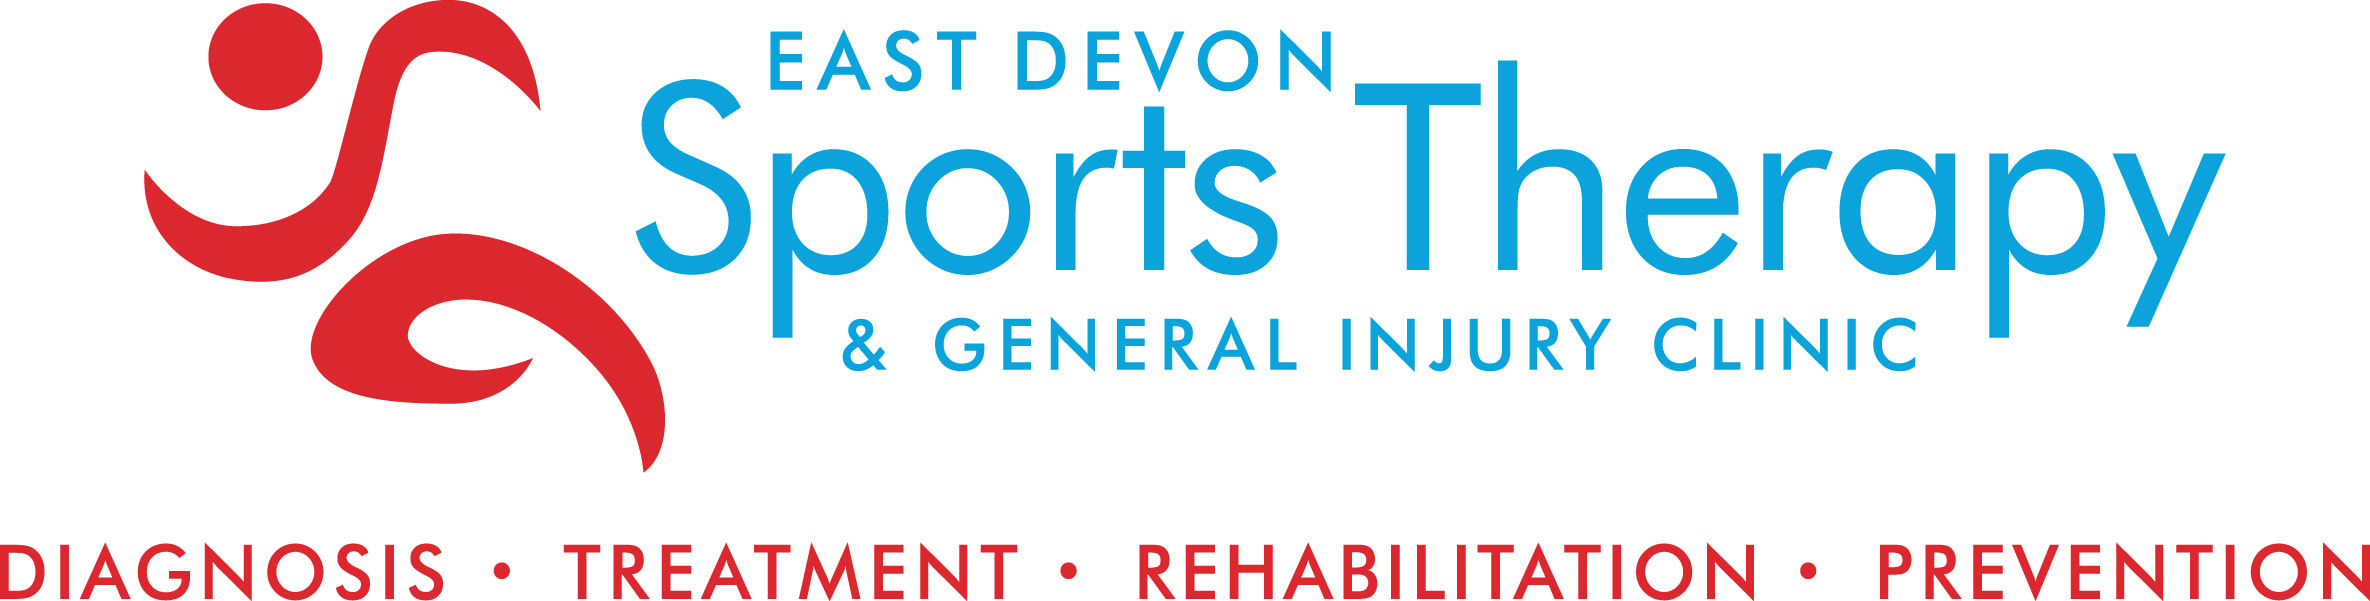 East Devon Sports Therapy